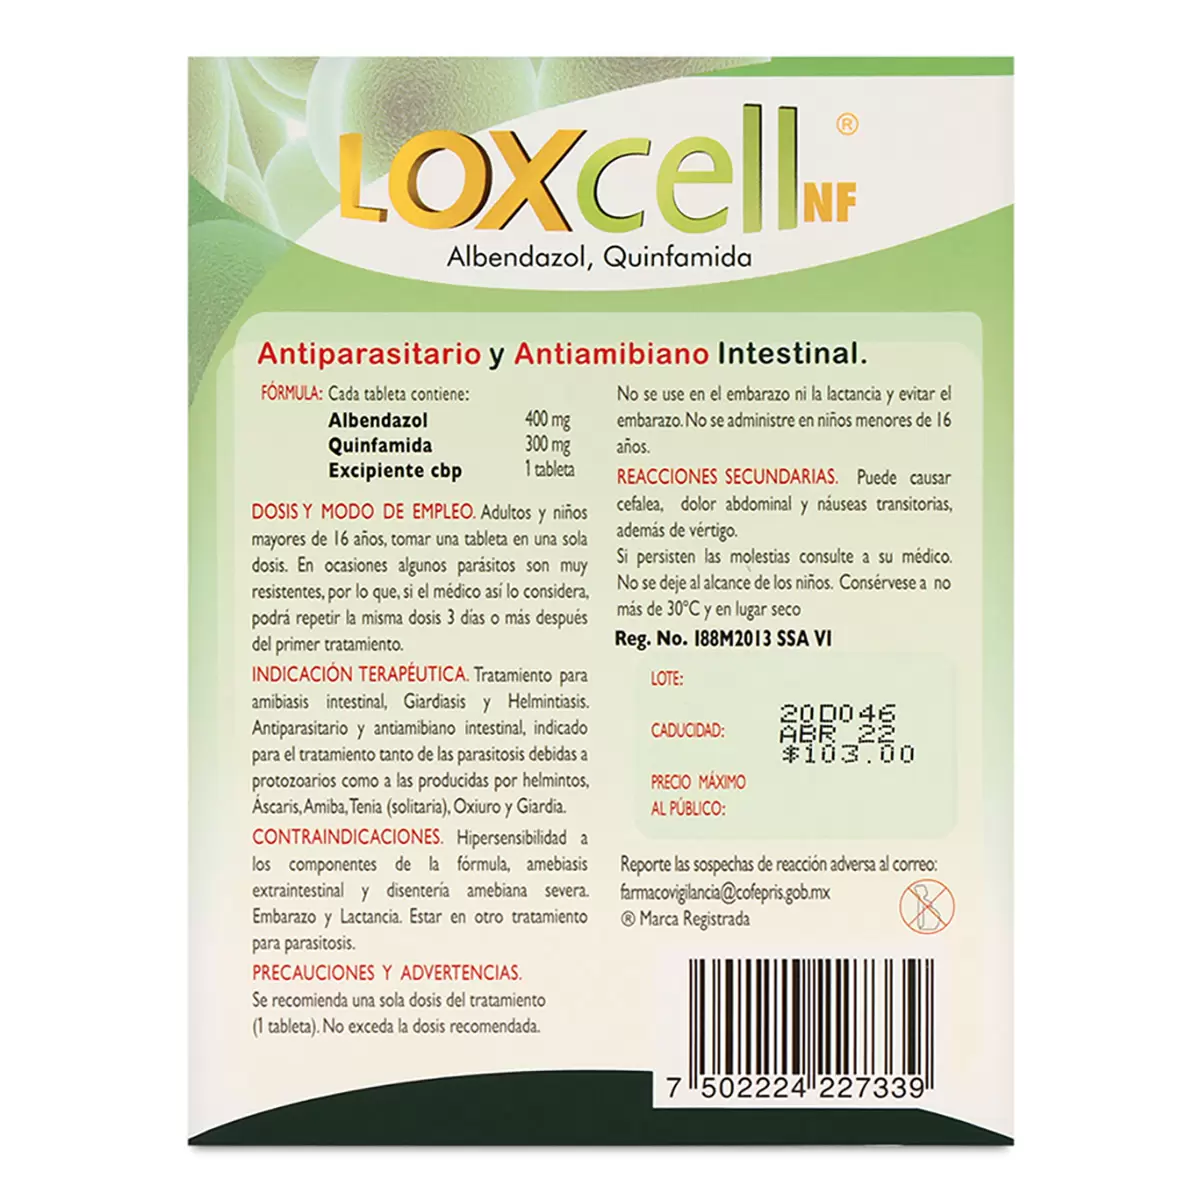 Loxcell NF 3 Cajas con 1 Tableta c/u Albendazol 400mg/Quinfamida 300mg 